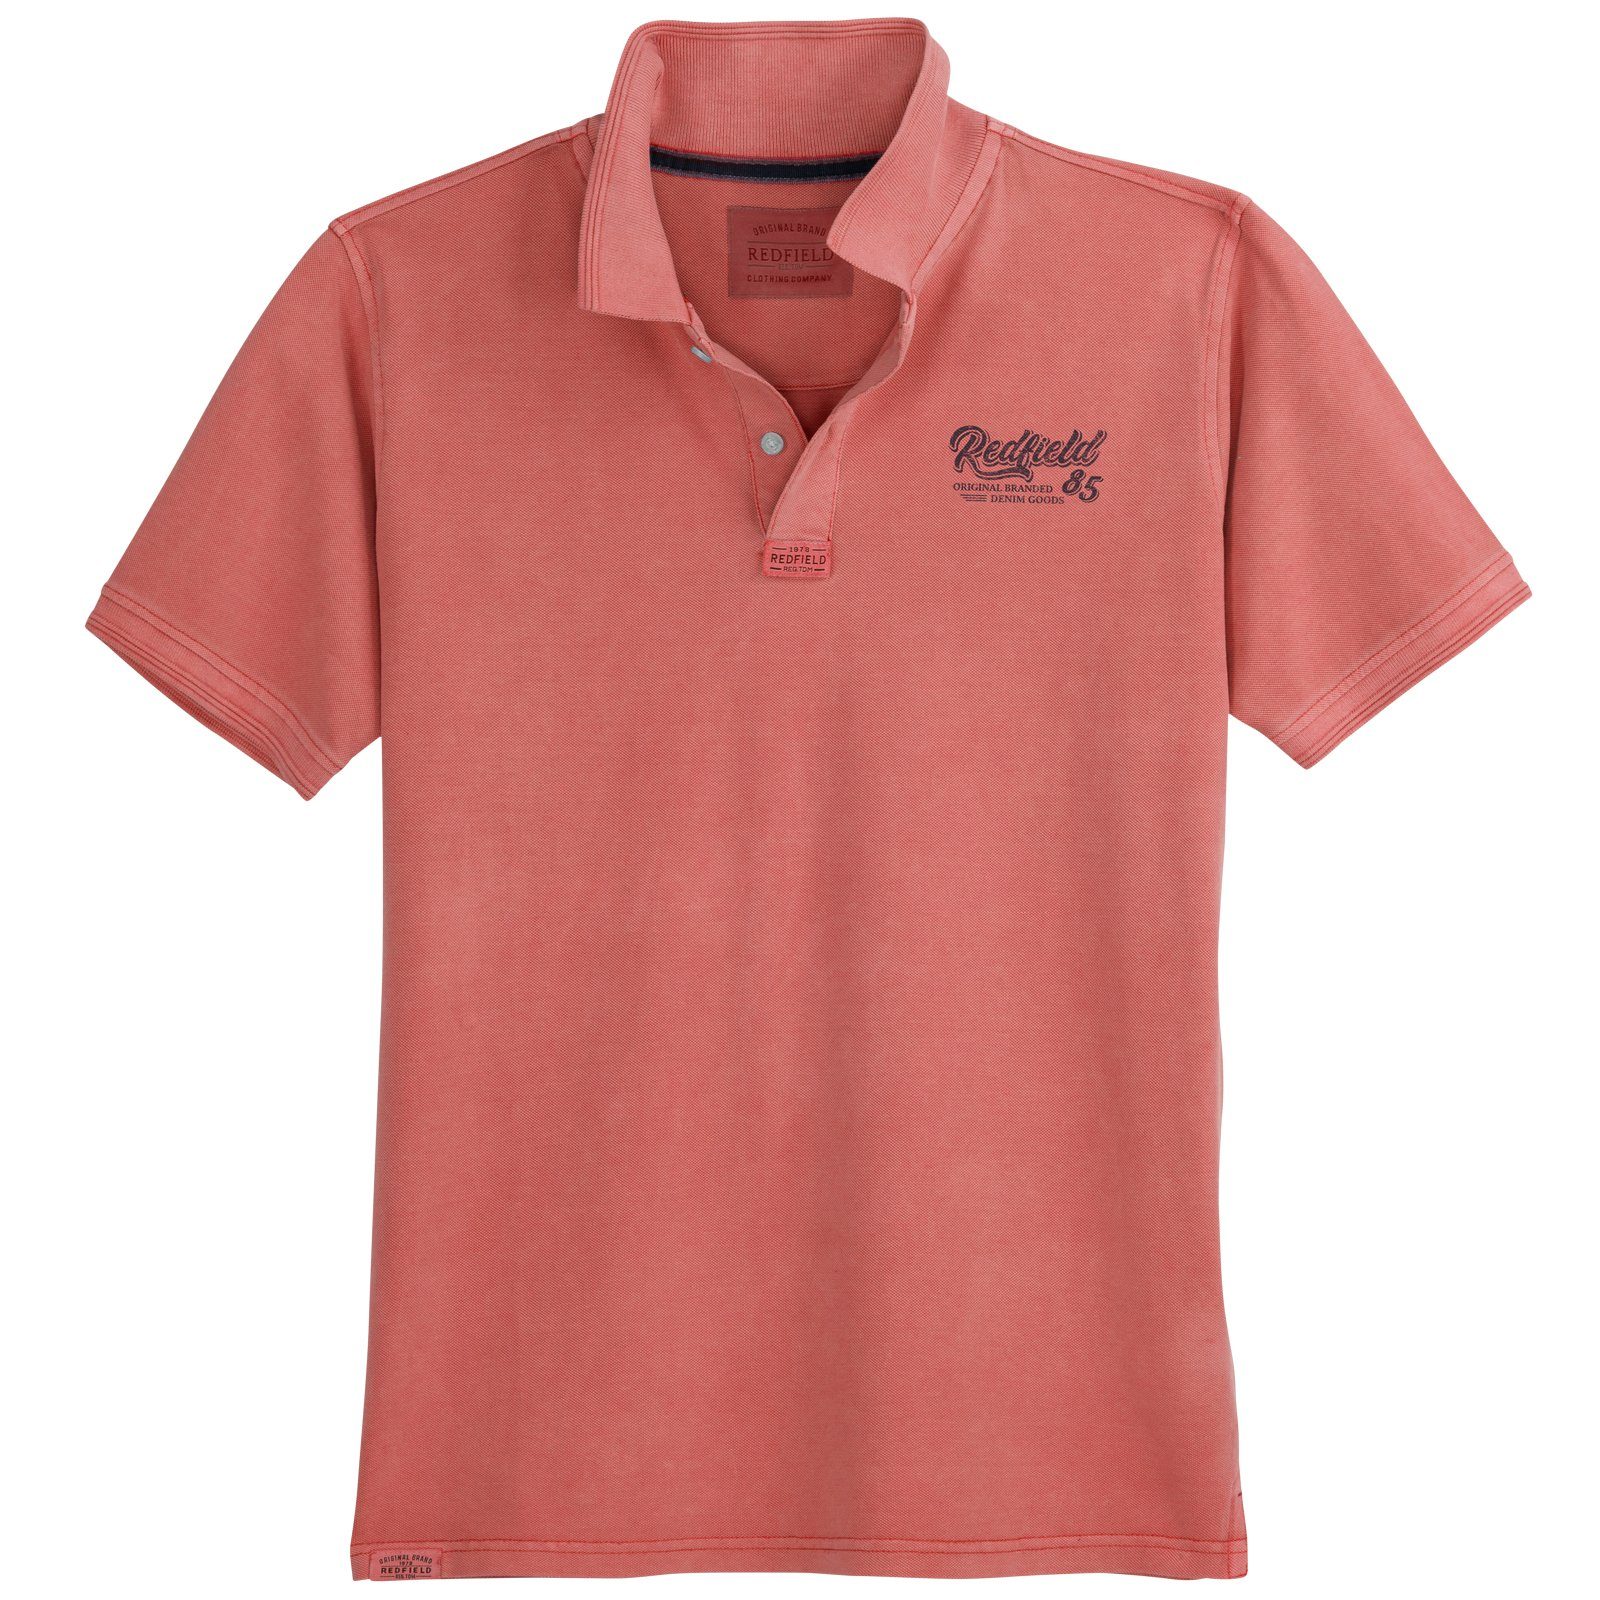 Redfield koralle Poloshirt bedruckt Look redfield Herren Used Große Größen Poloshirt